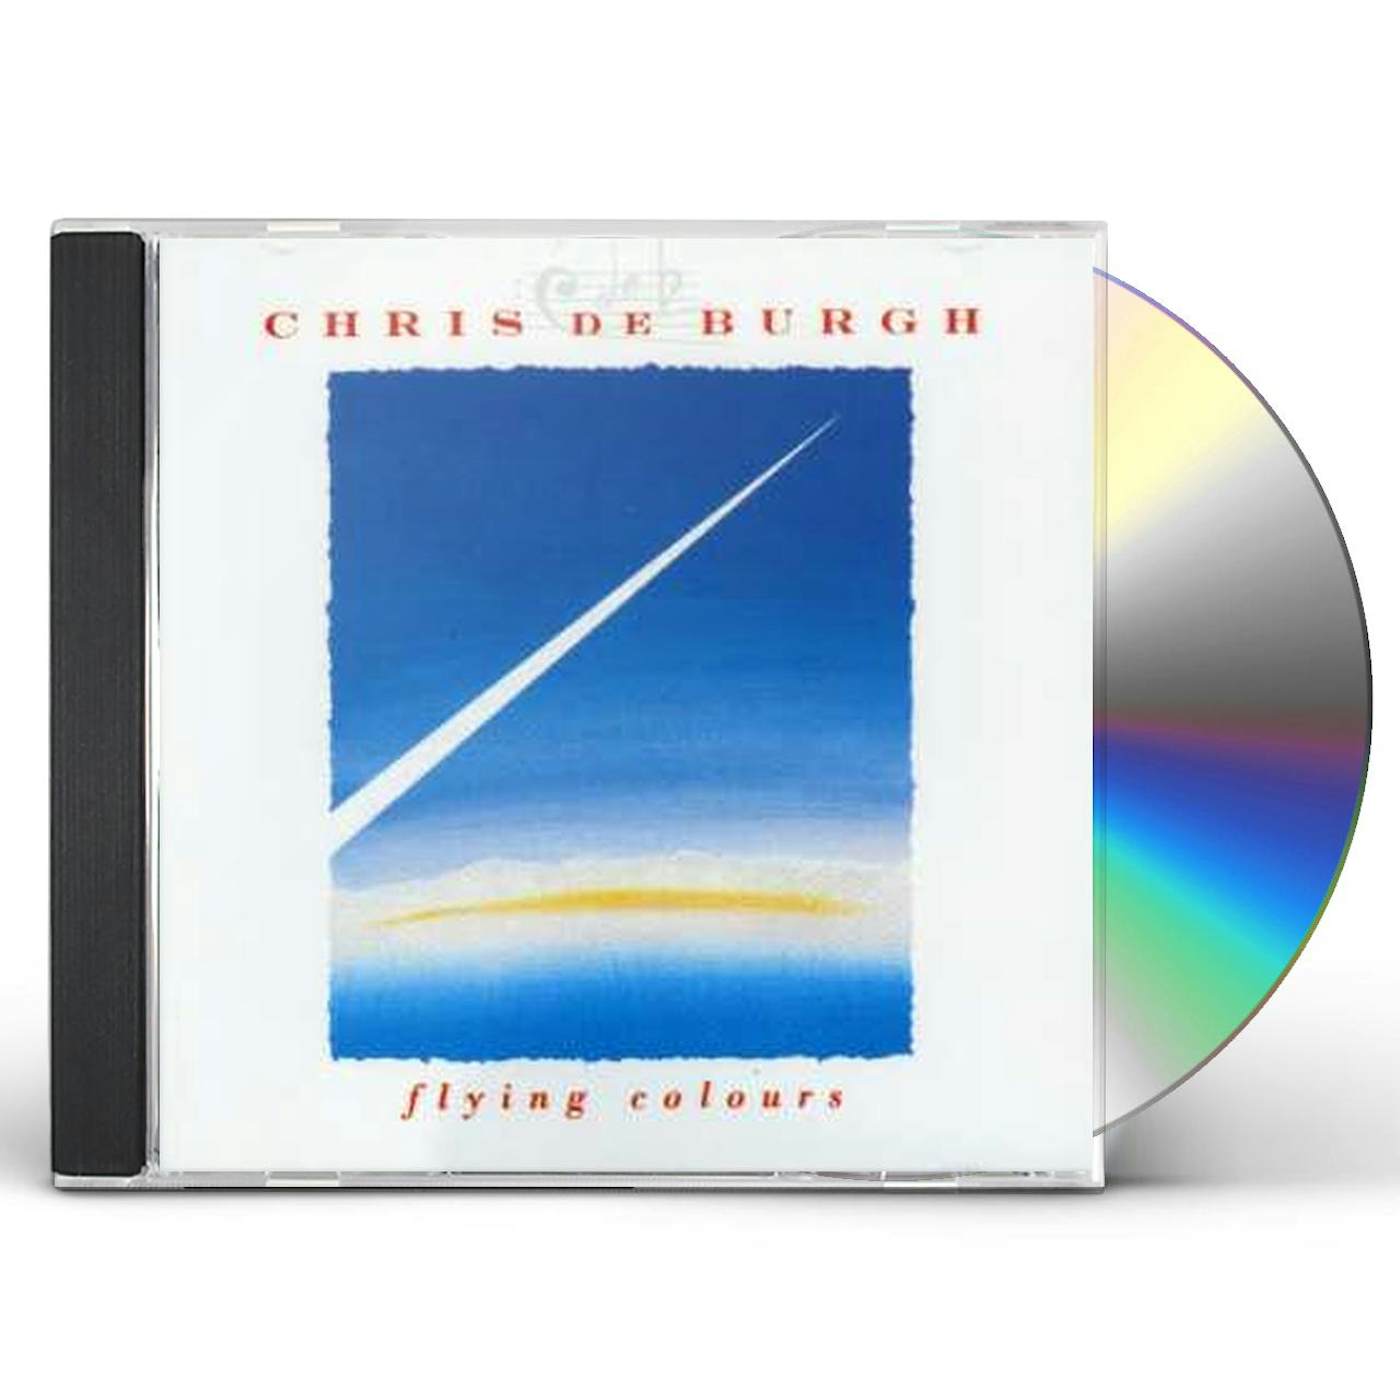 Chris de Burgh FLYING COLORS CD